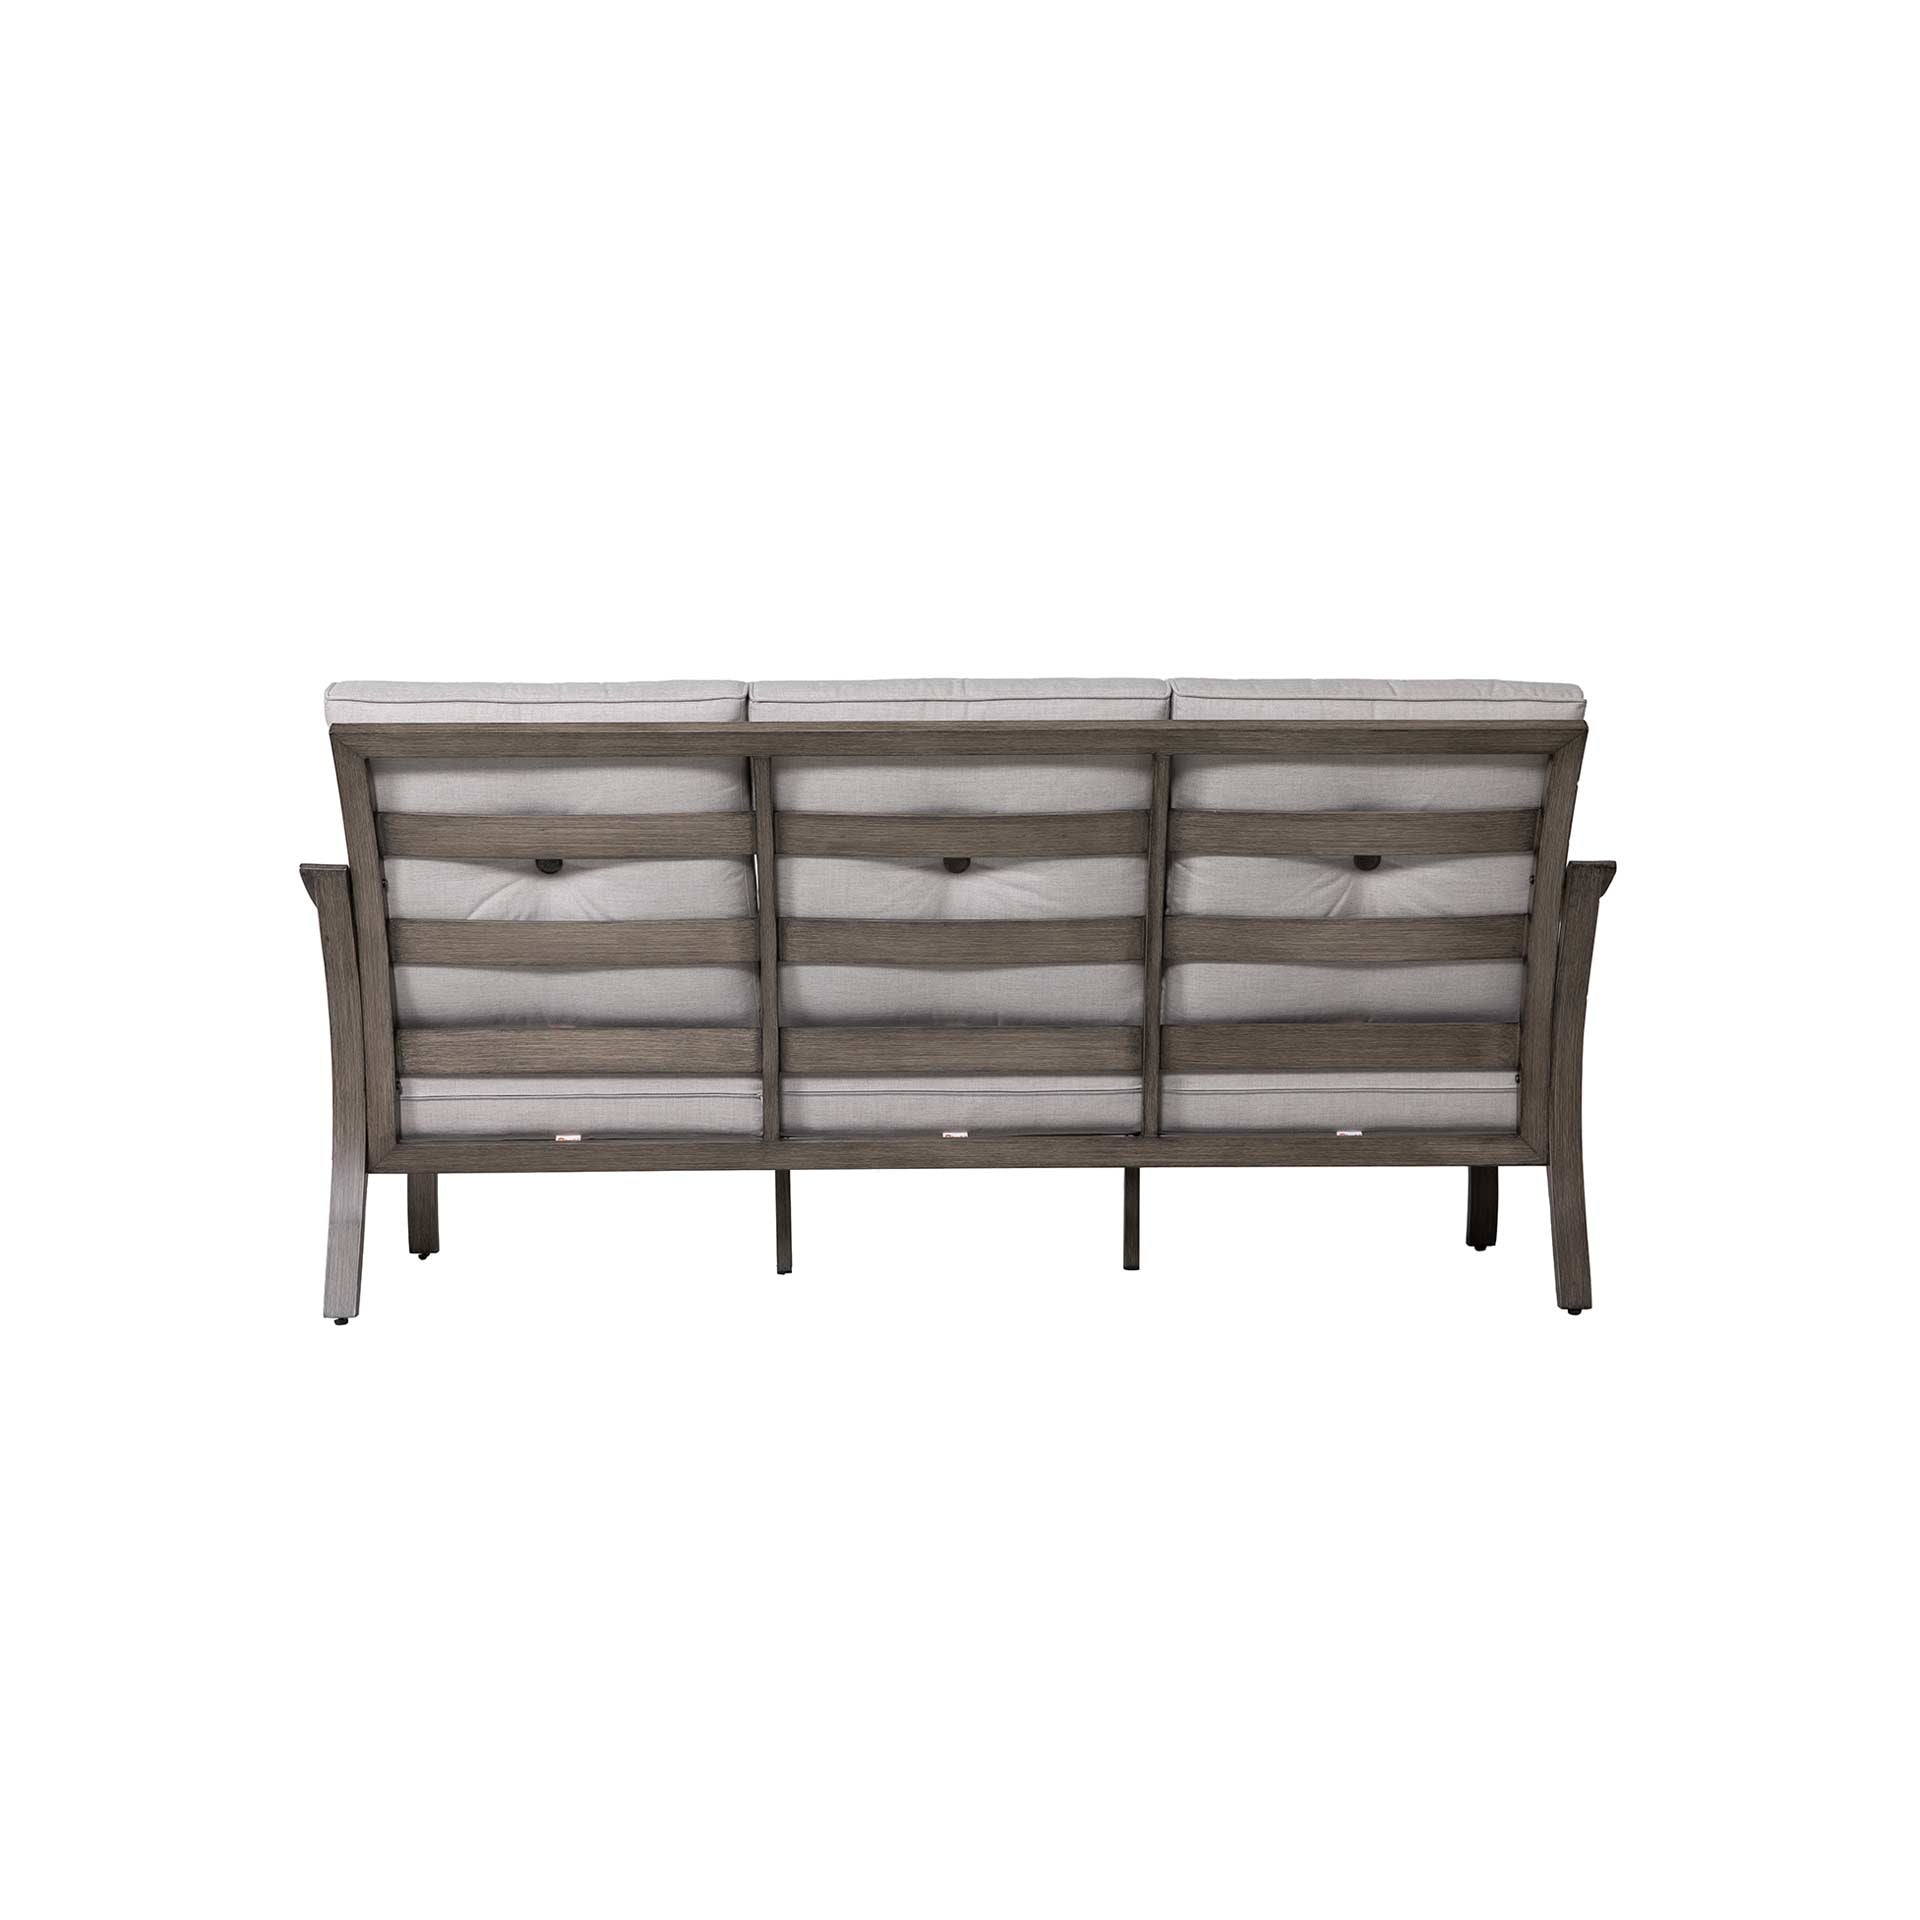 Patio Time Huron 4-piece Aluminum Sofa Set